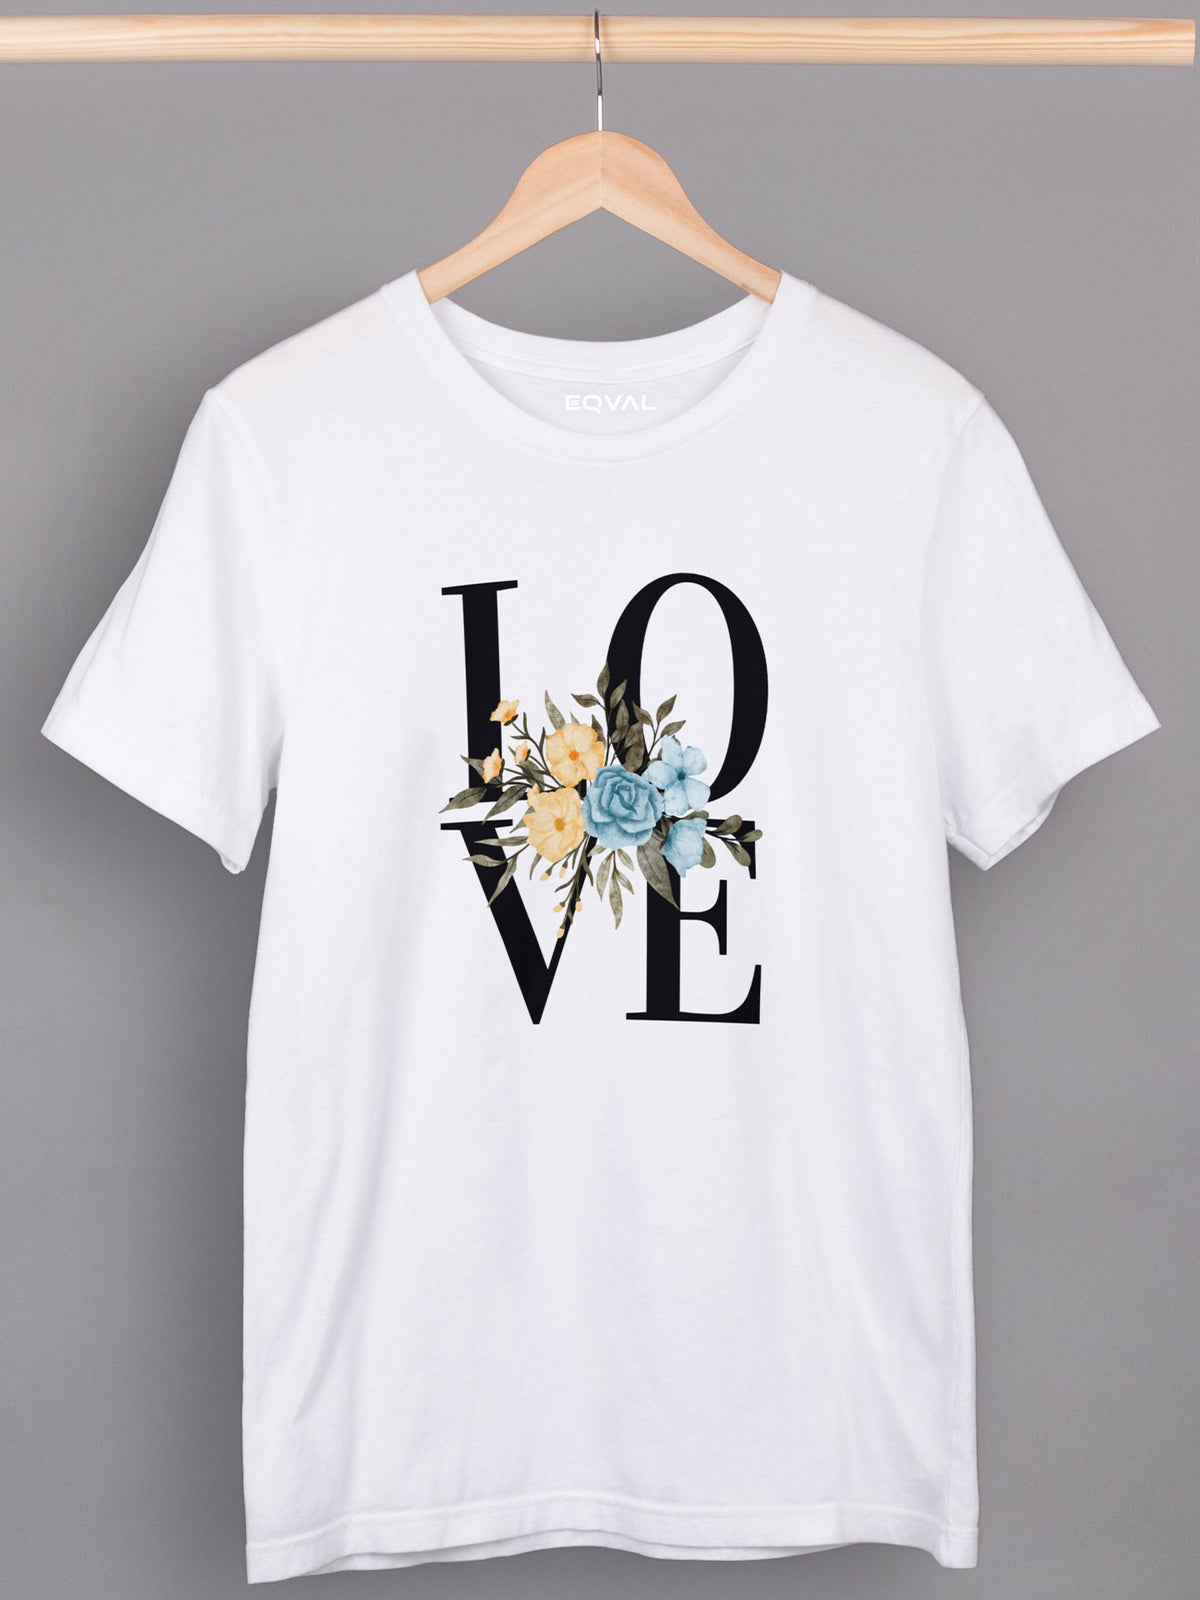 Men's White LOVE Printed T-shirt